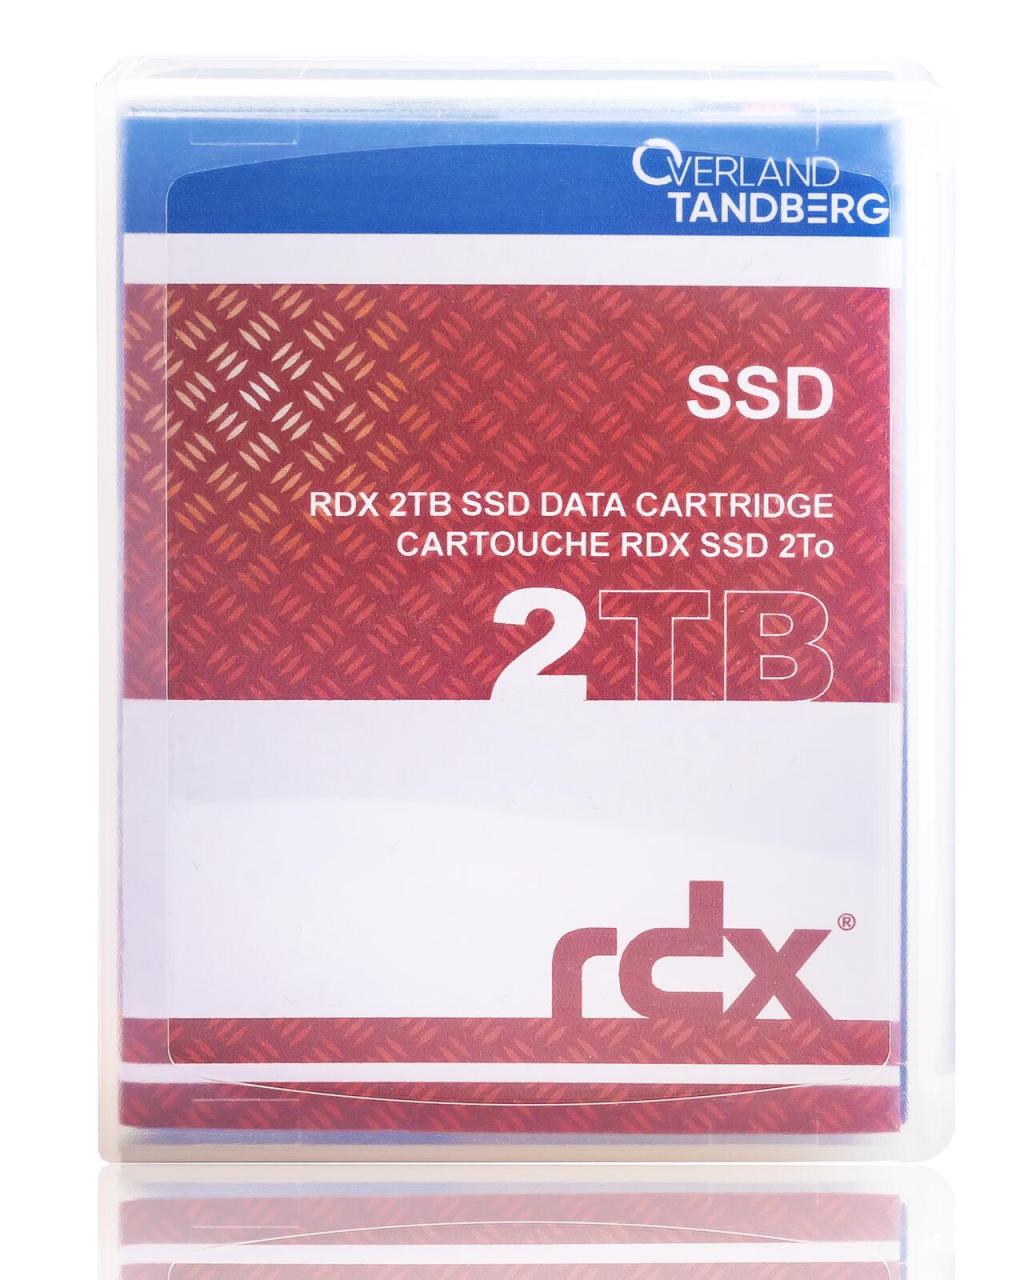 Overland-Tandberg RDX 2TB SSD Kartusche (8878-RDX) von Overland-Tandberg